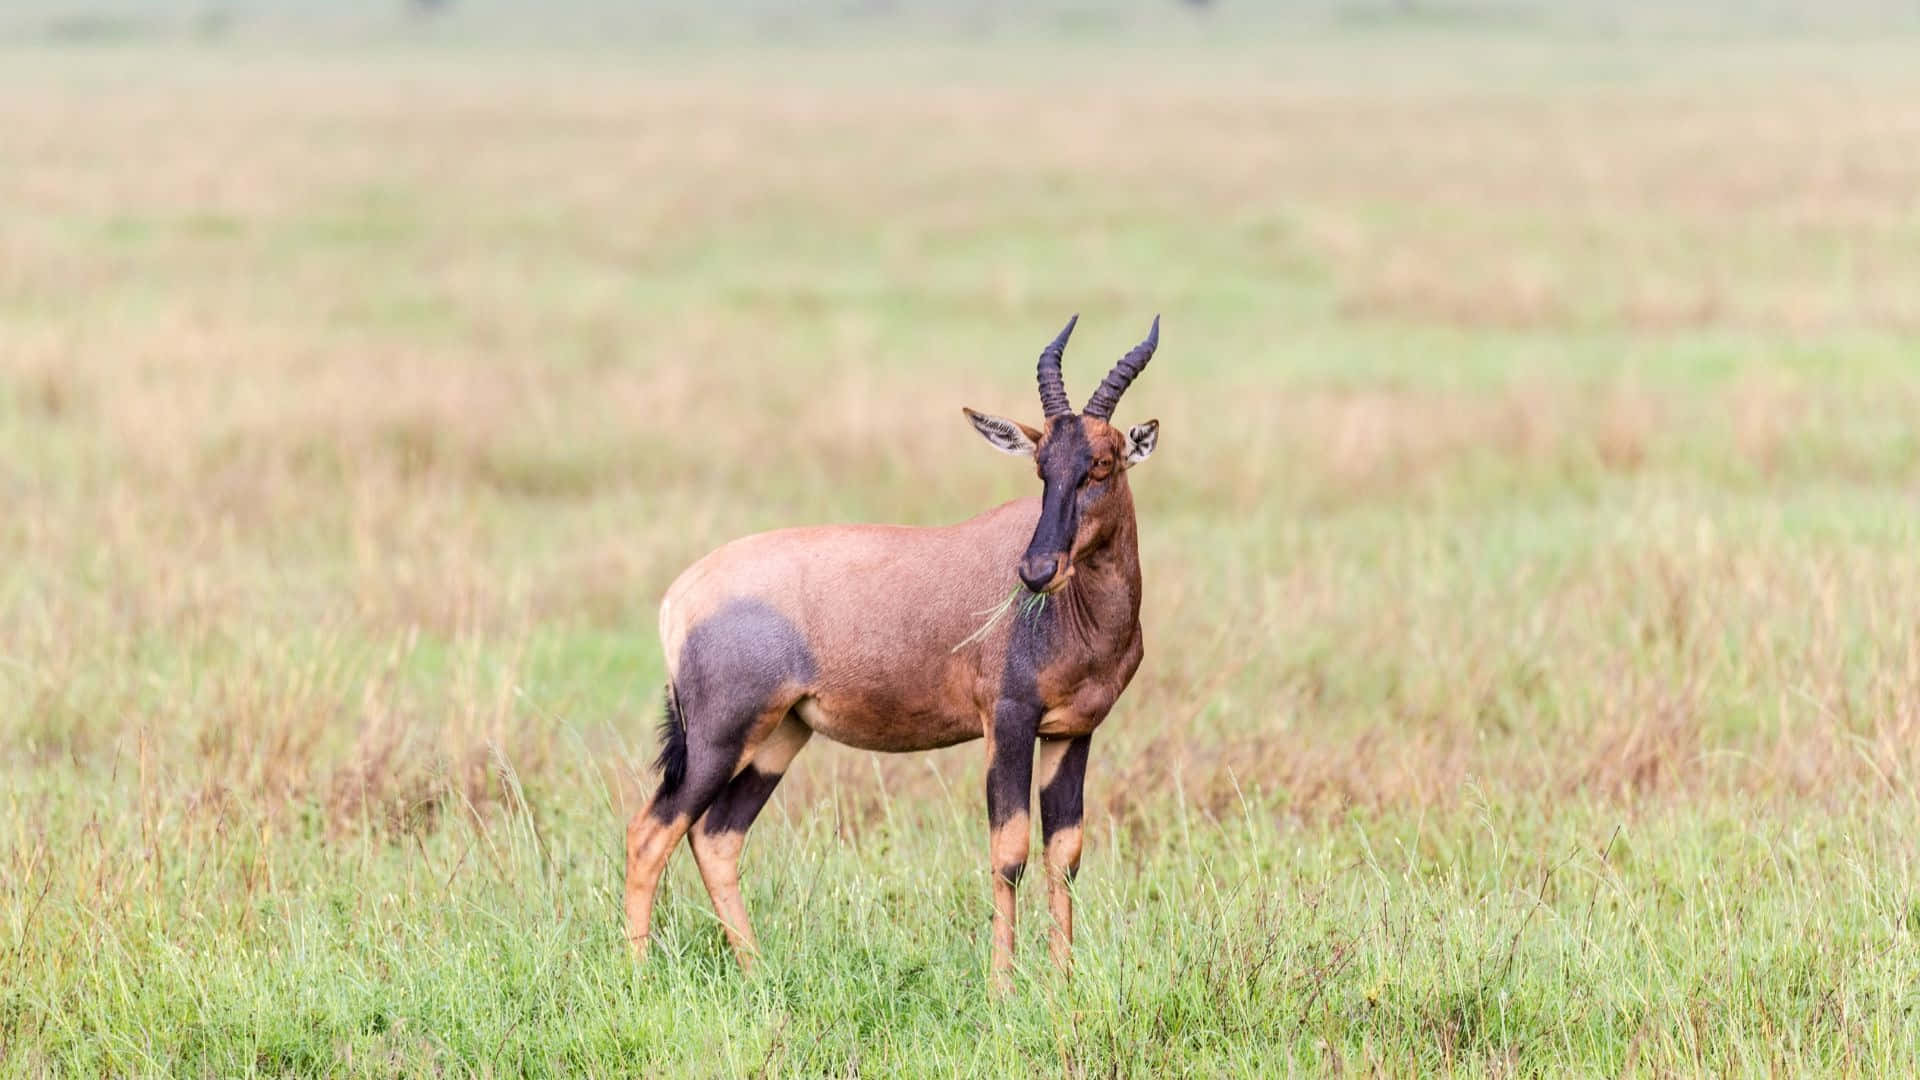 Topi Antelopein Savannah Grasslands.jpg Wallpaper